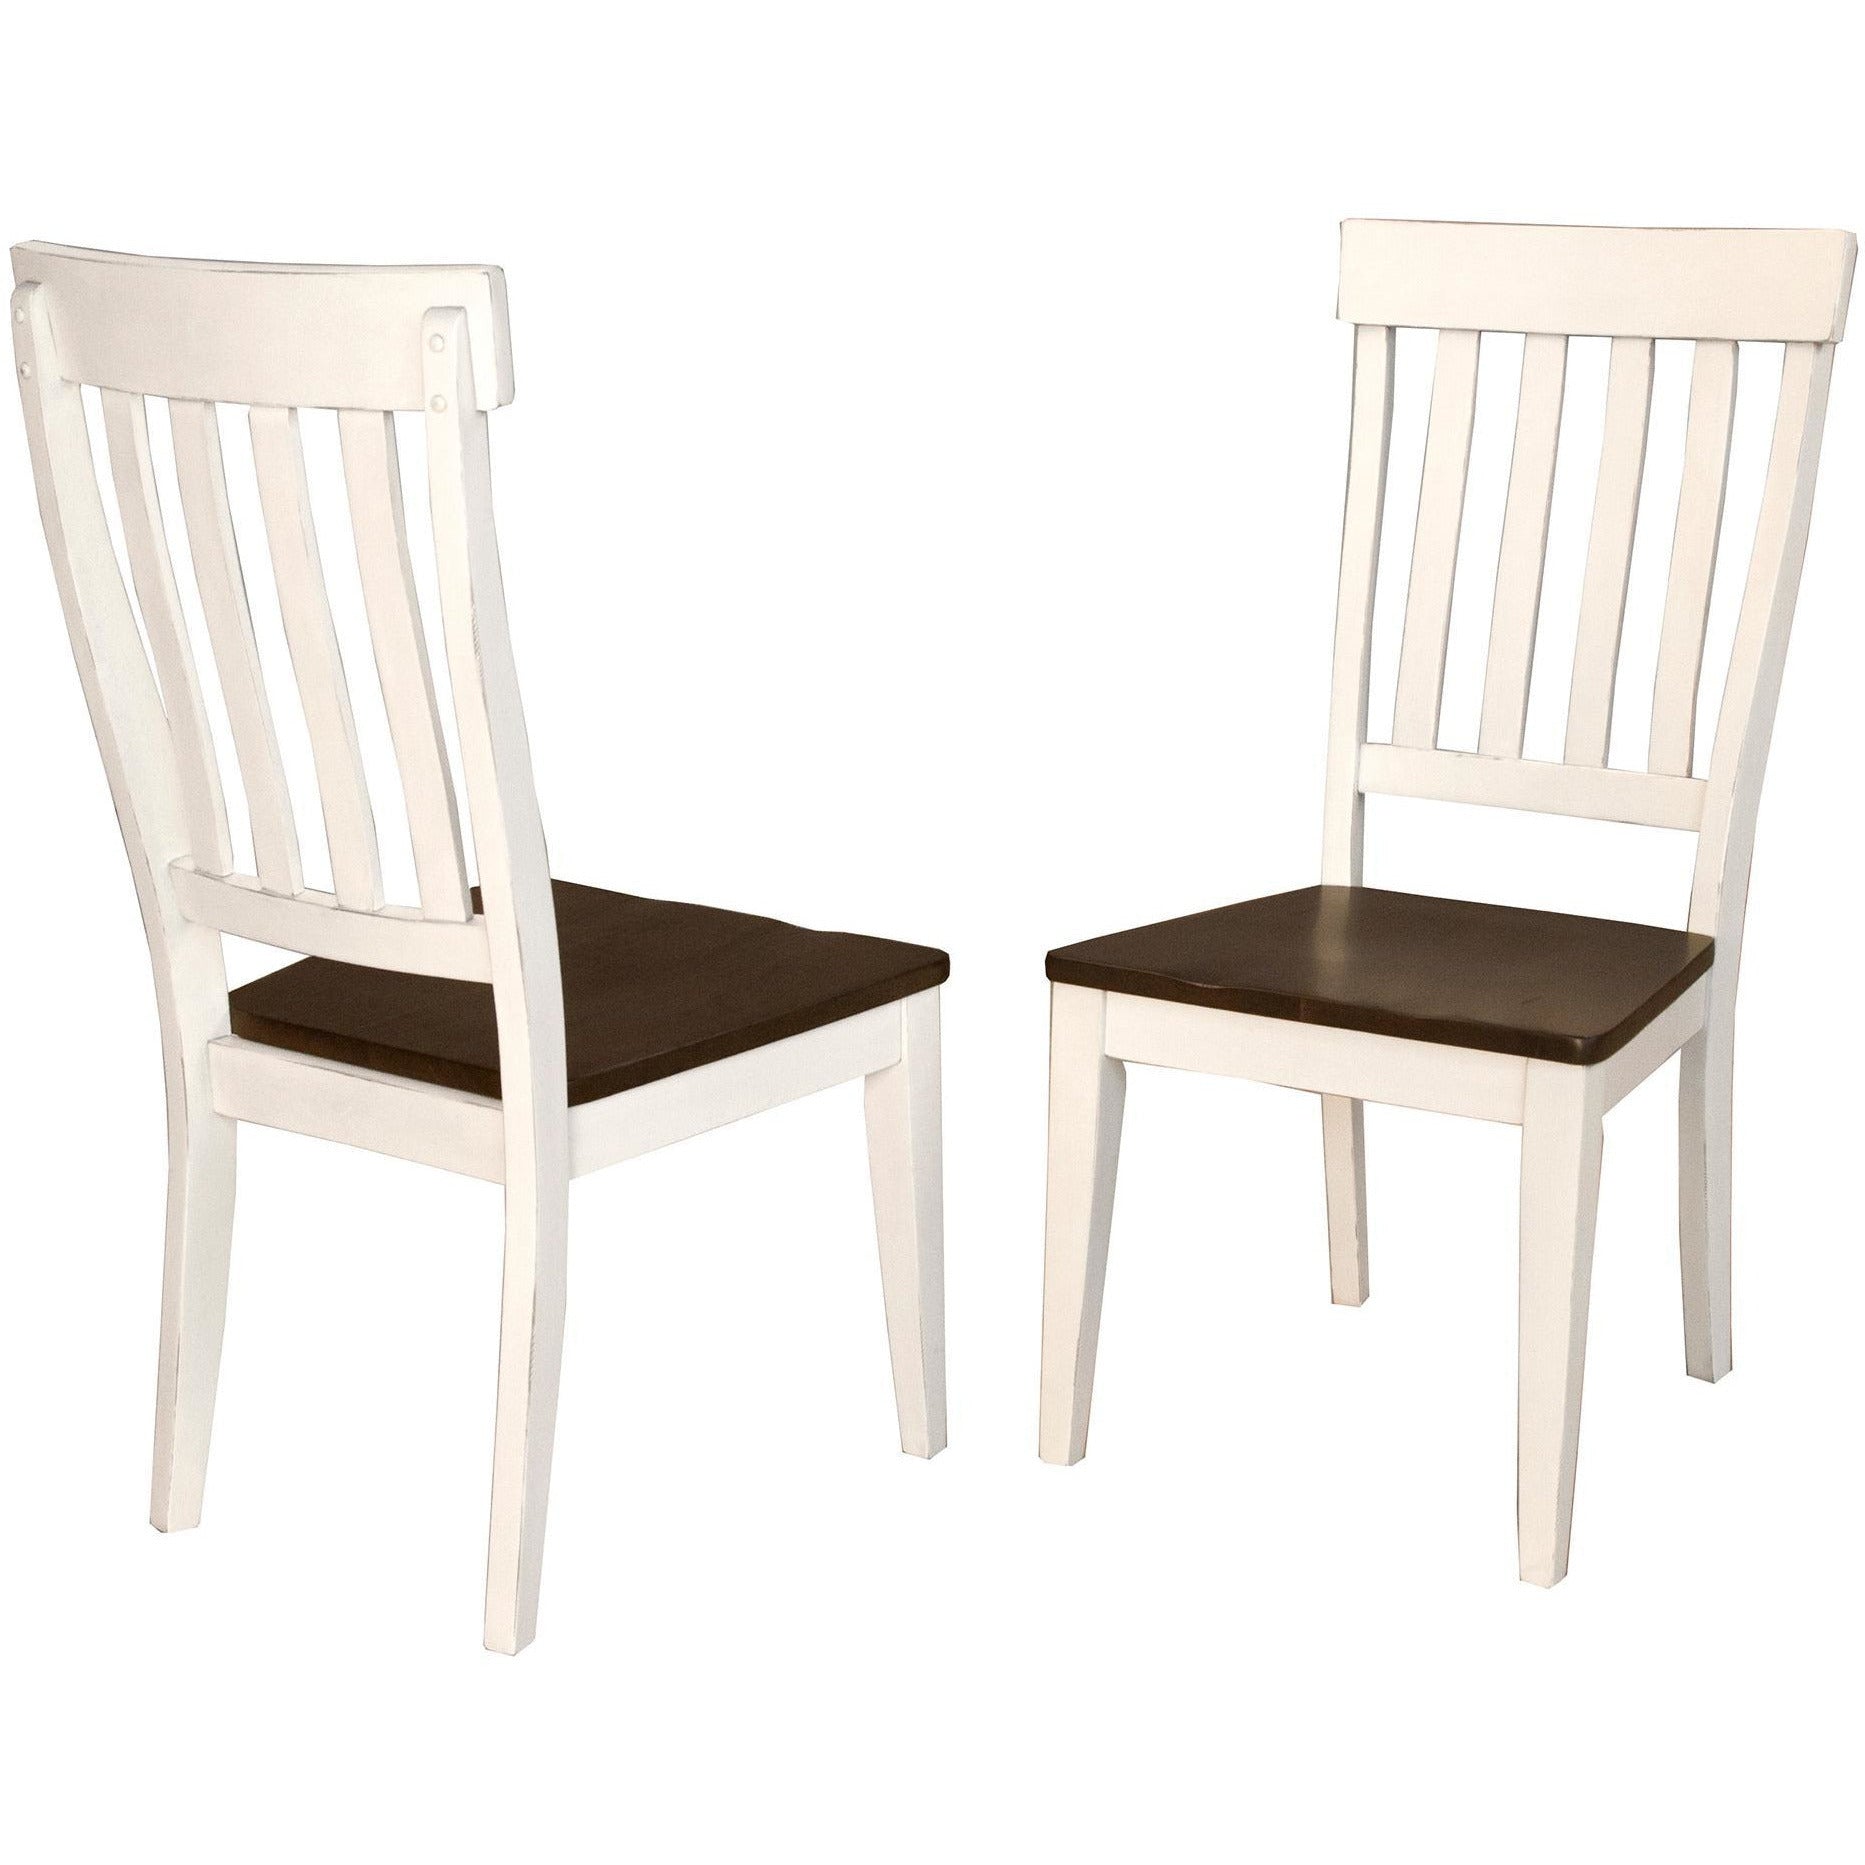 Mariposa Slatback Chair - White